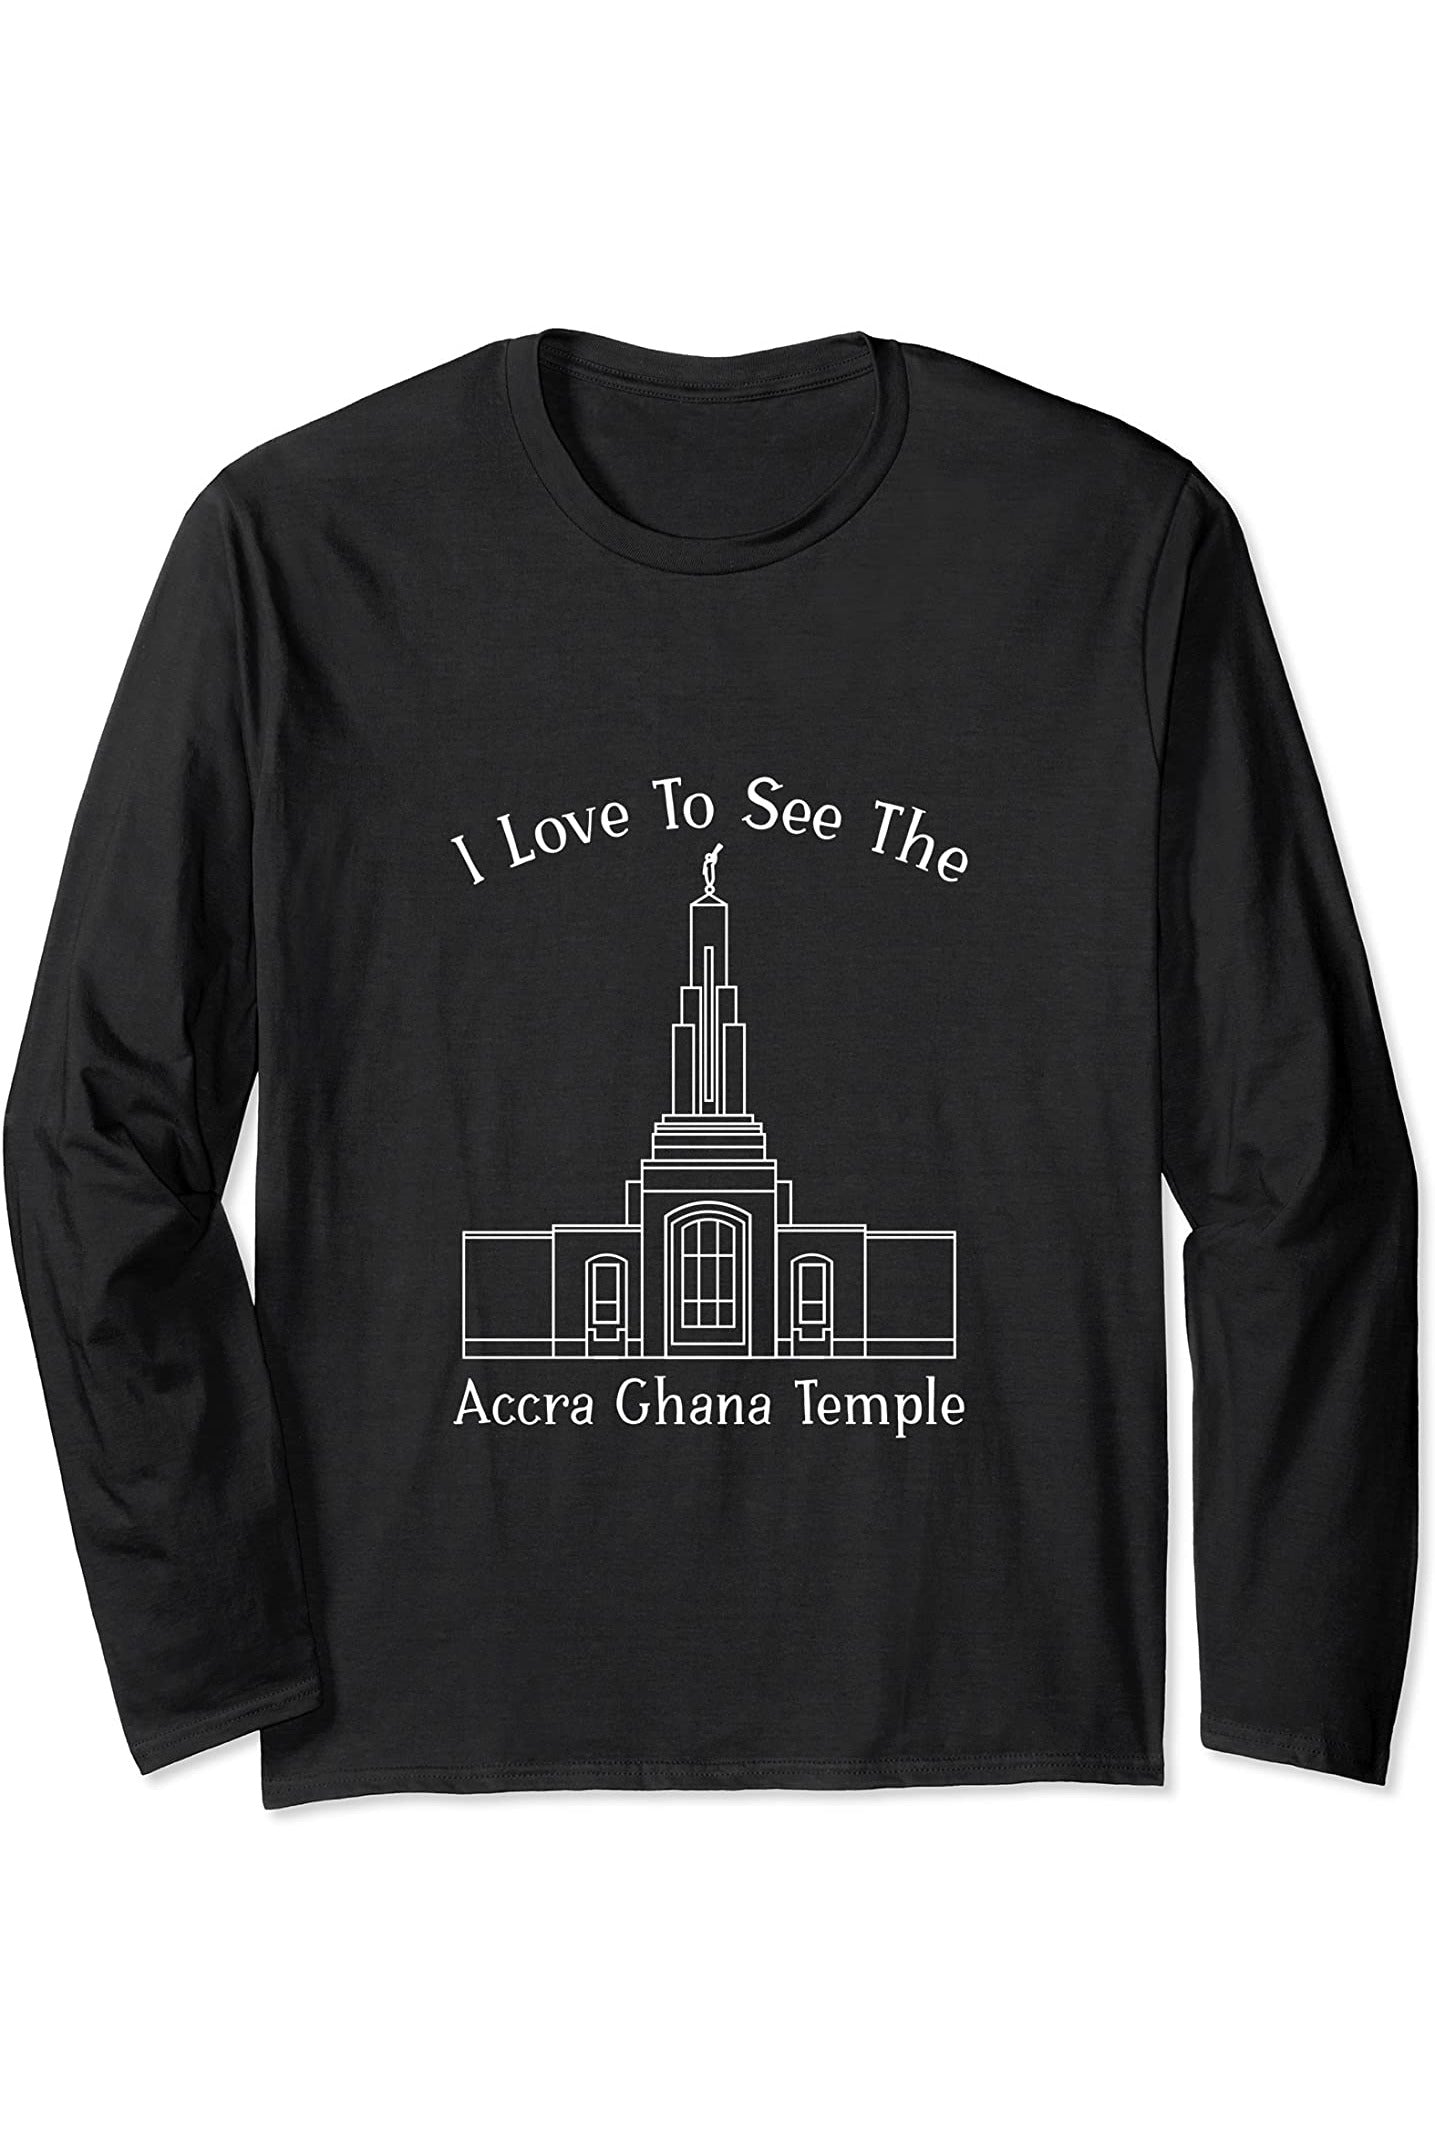 Accra Ghana Temple Long Sleeve T-Shirt - Happy Style (English) US